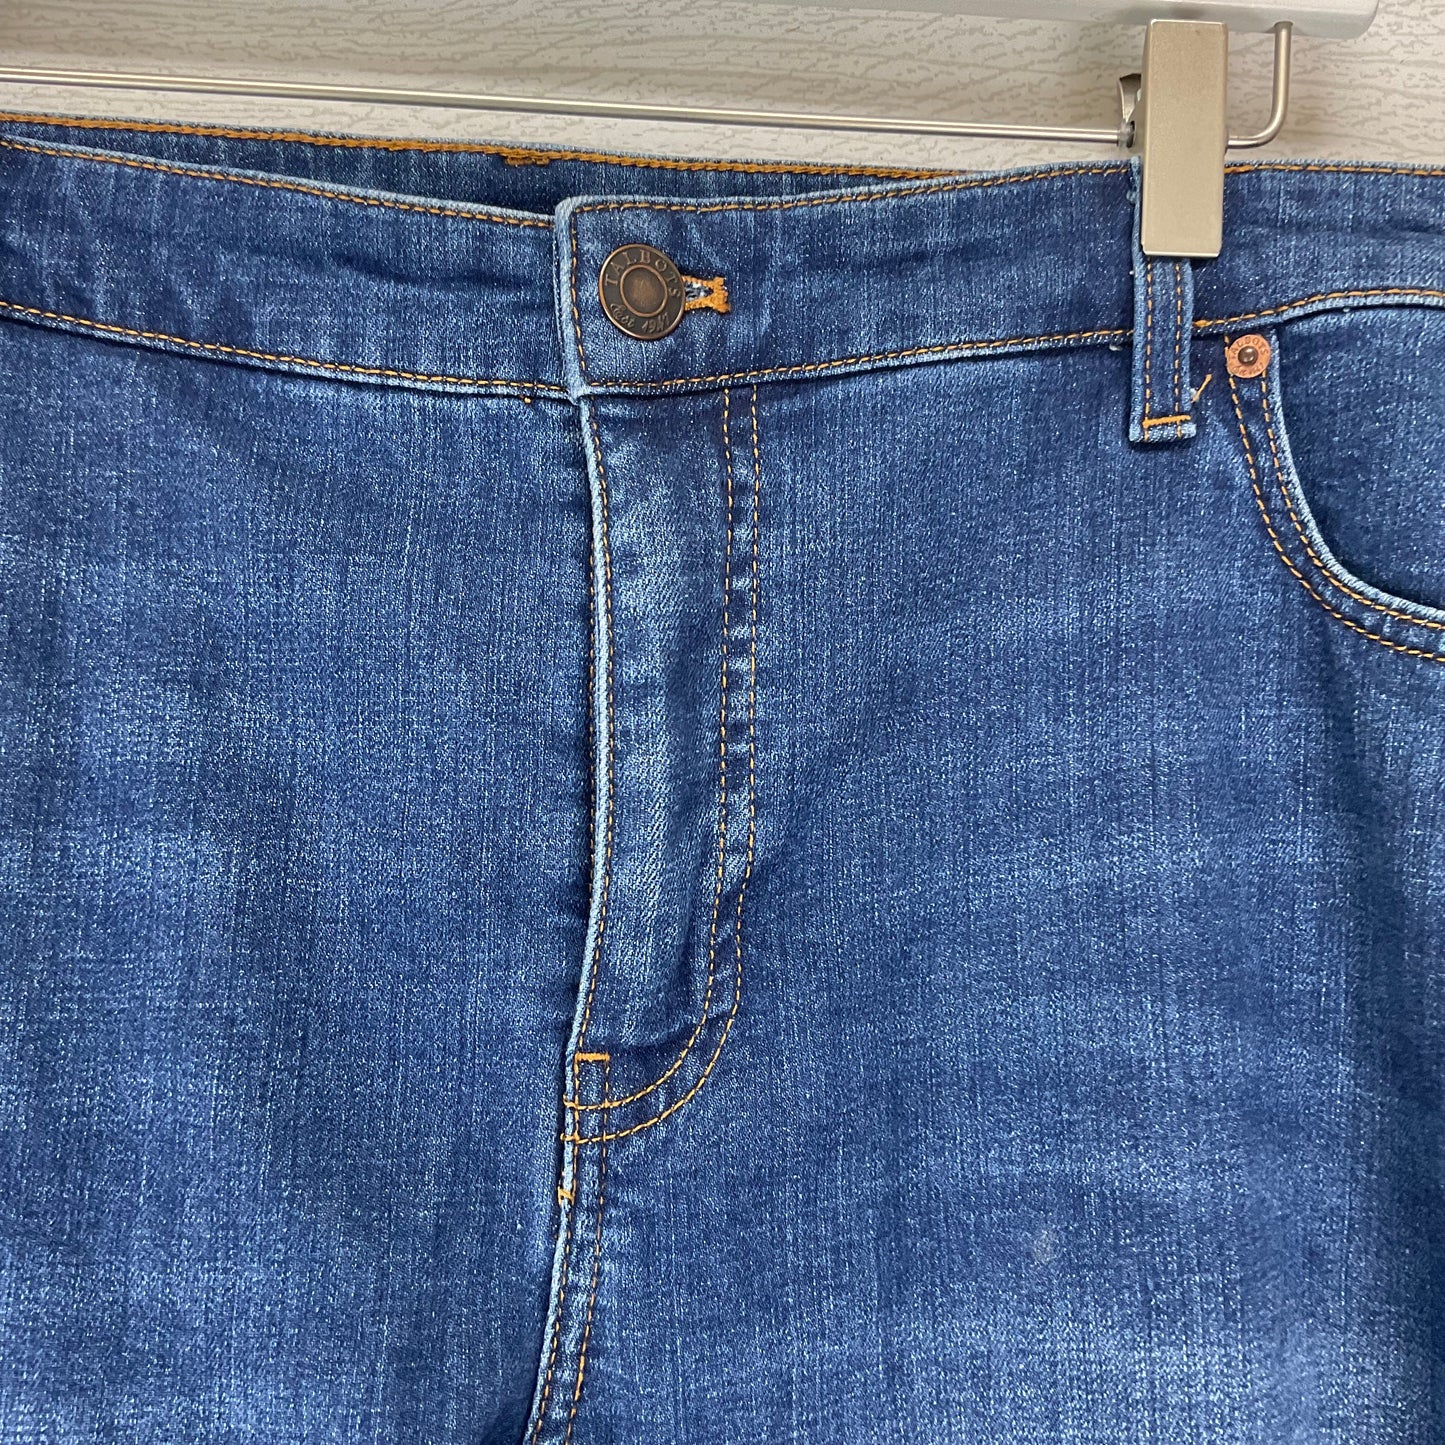 Blue Denim Jeans Cropped Talbots, Size 22